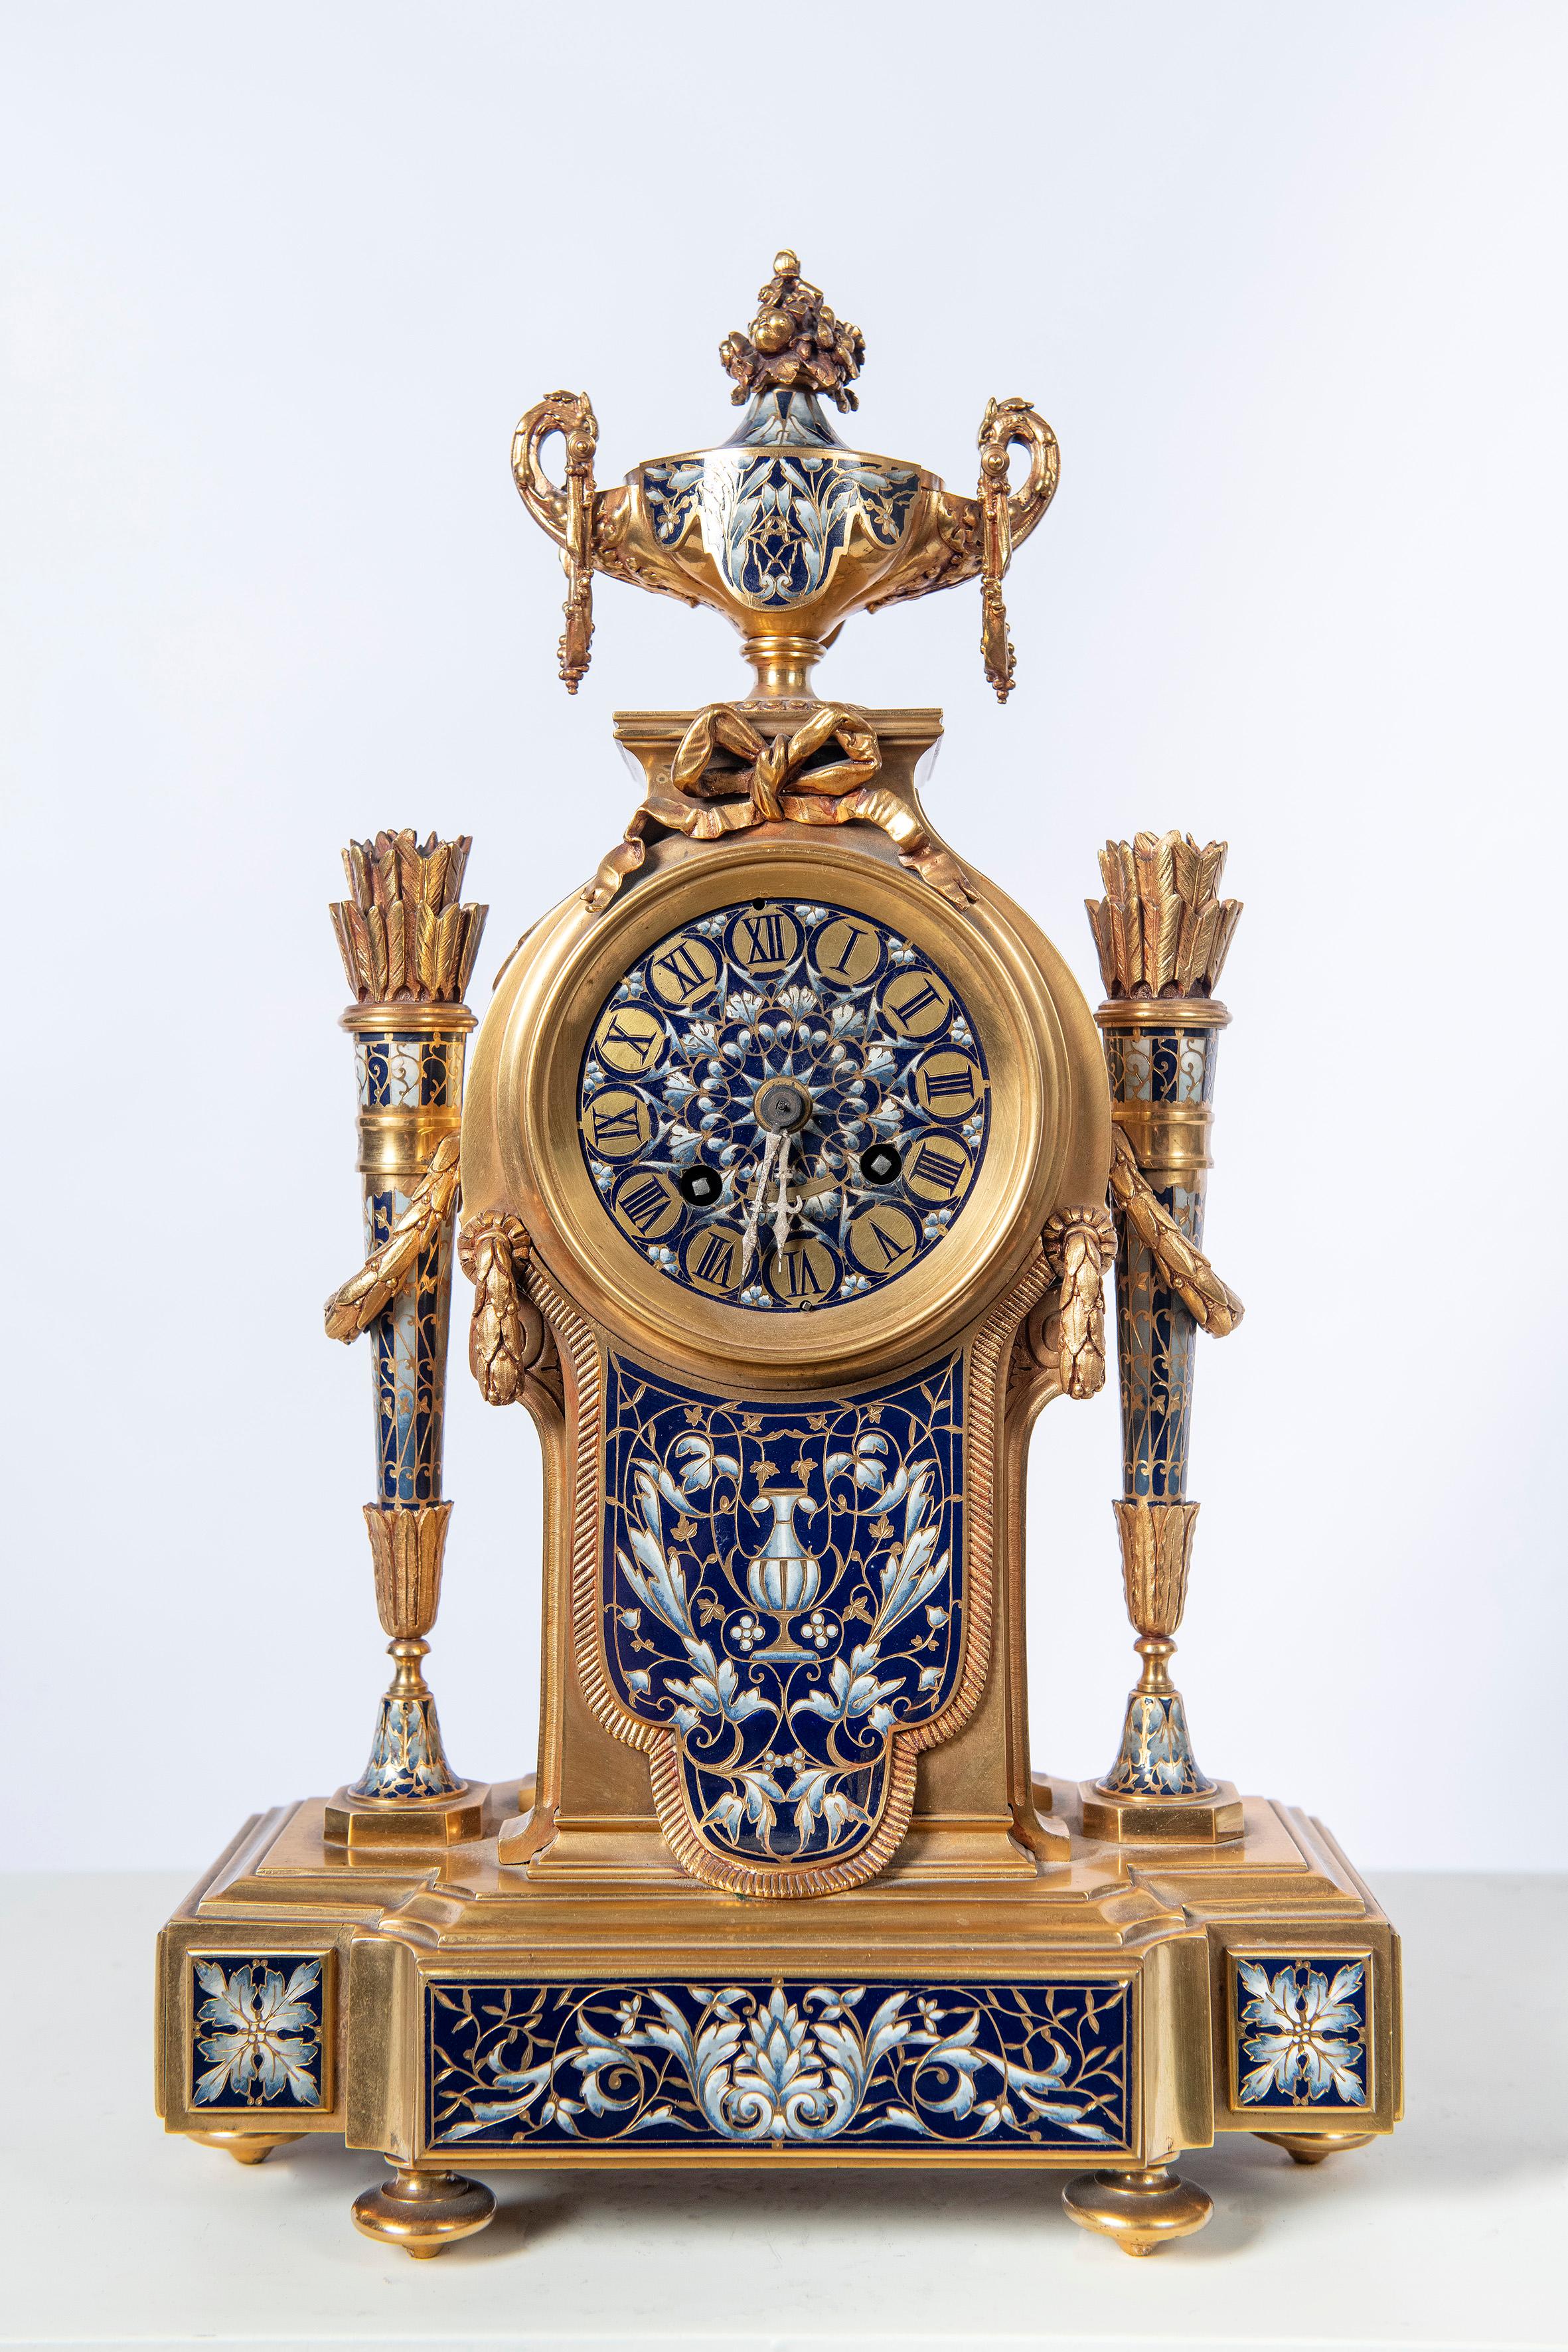 Gilt-bronze and cloisonné garniture, France, 19th century.
Clock works.